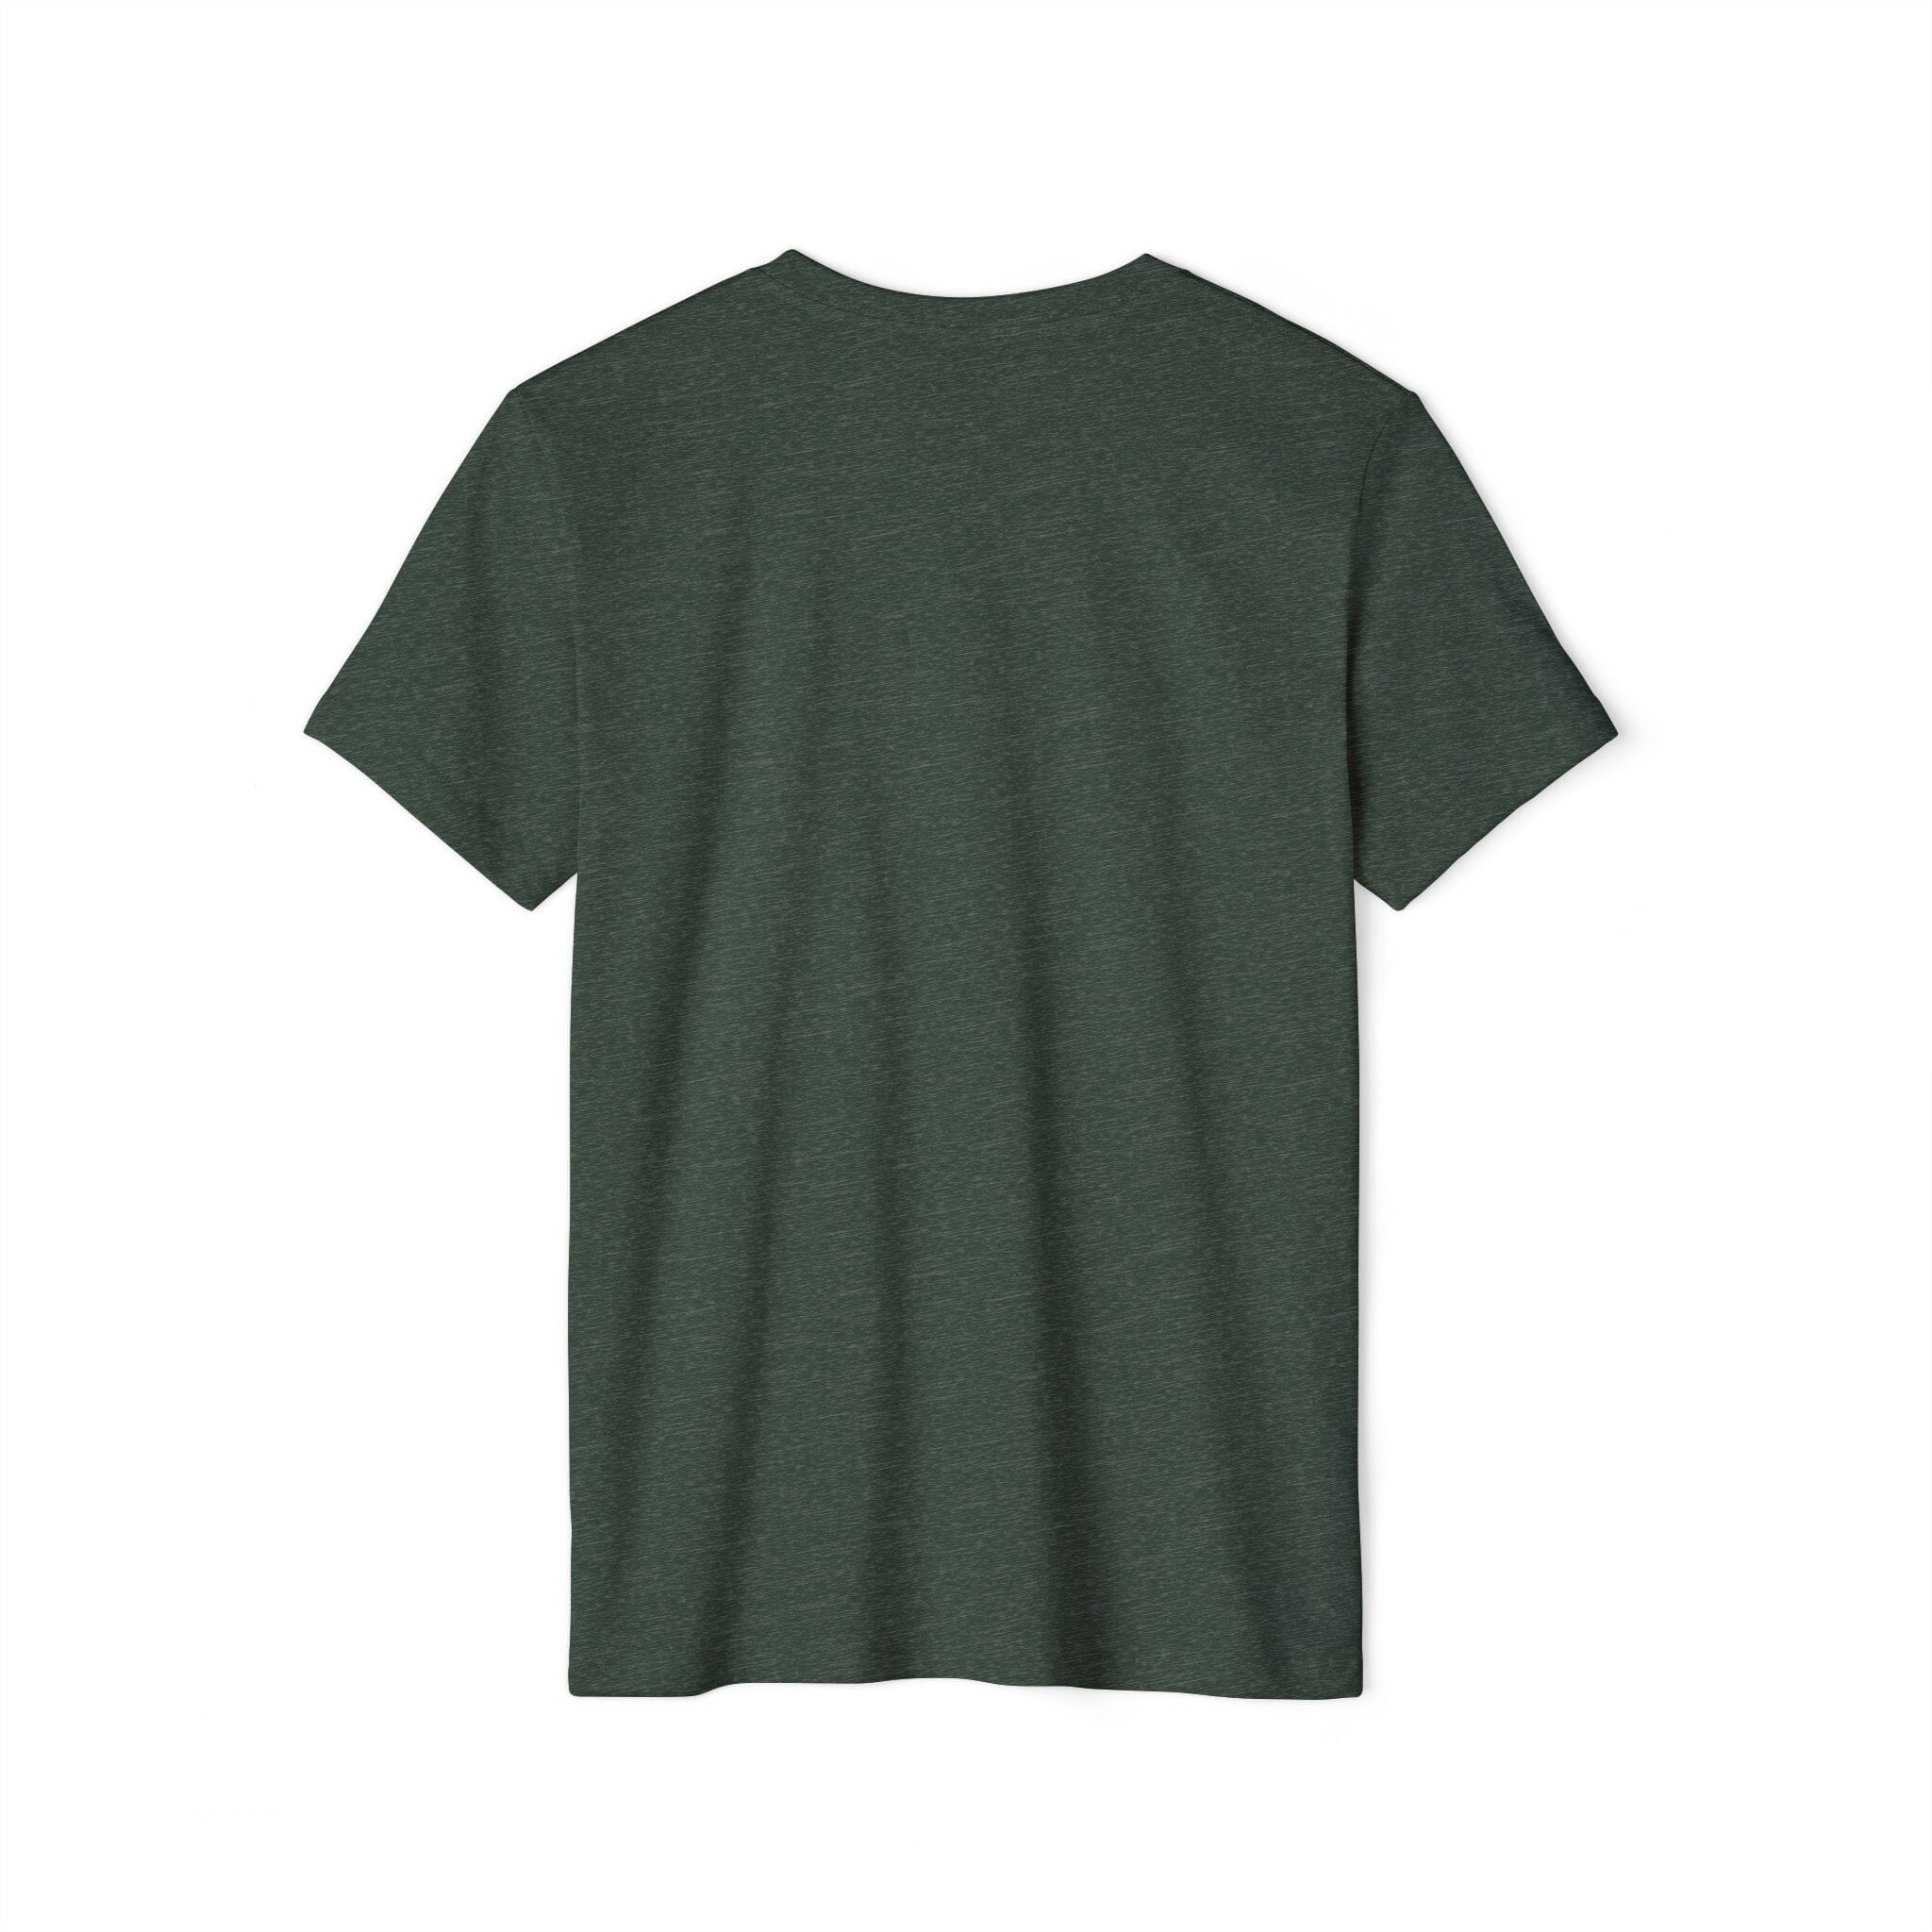 Ohio Maker Recycled Organic T-Shirt T-Shirt Printify 